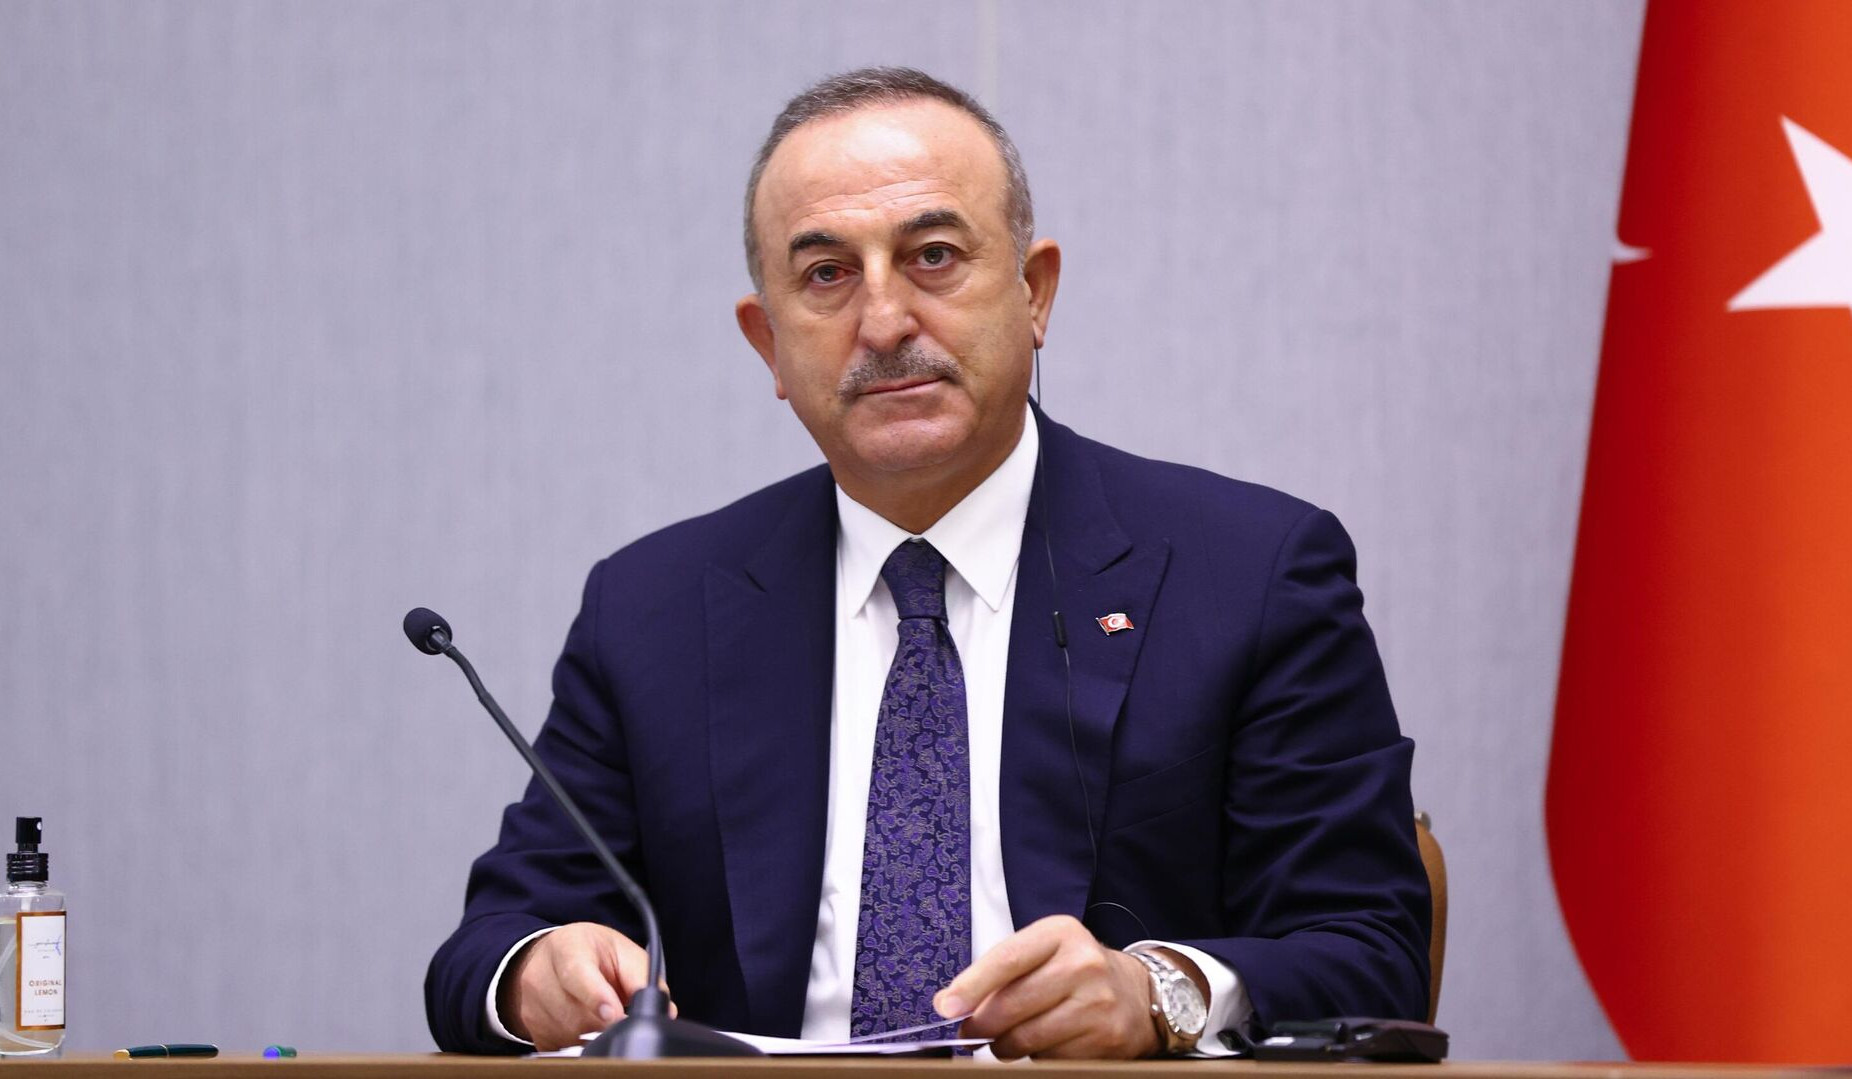 Çavuşoğlu threatened Greece to raise issue of sovereignty of Aegean islands